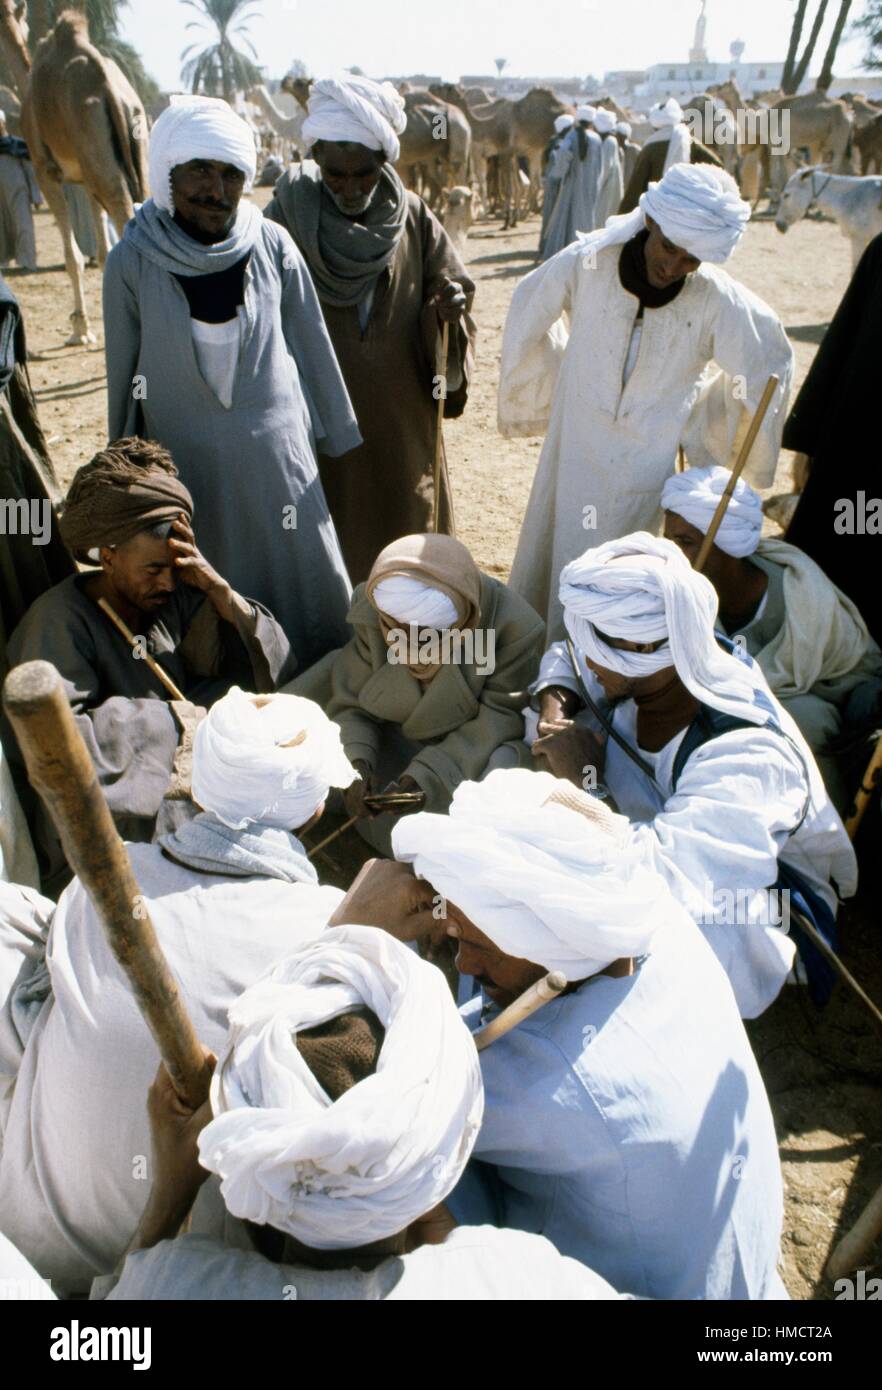 Men in traditional dress wearing turbans, cattle market, Egypt. Stock Photo